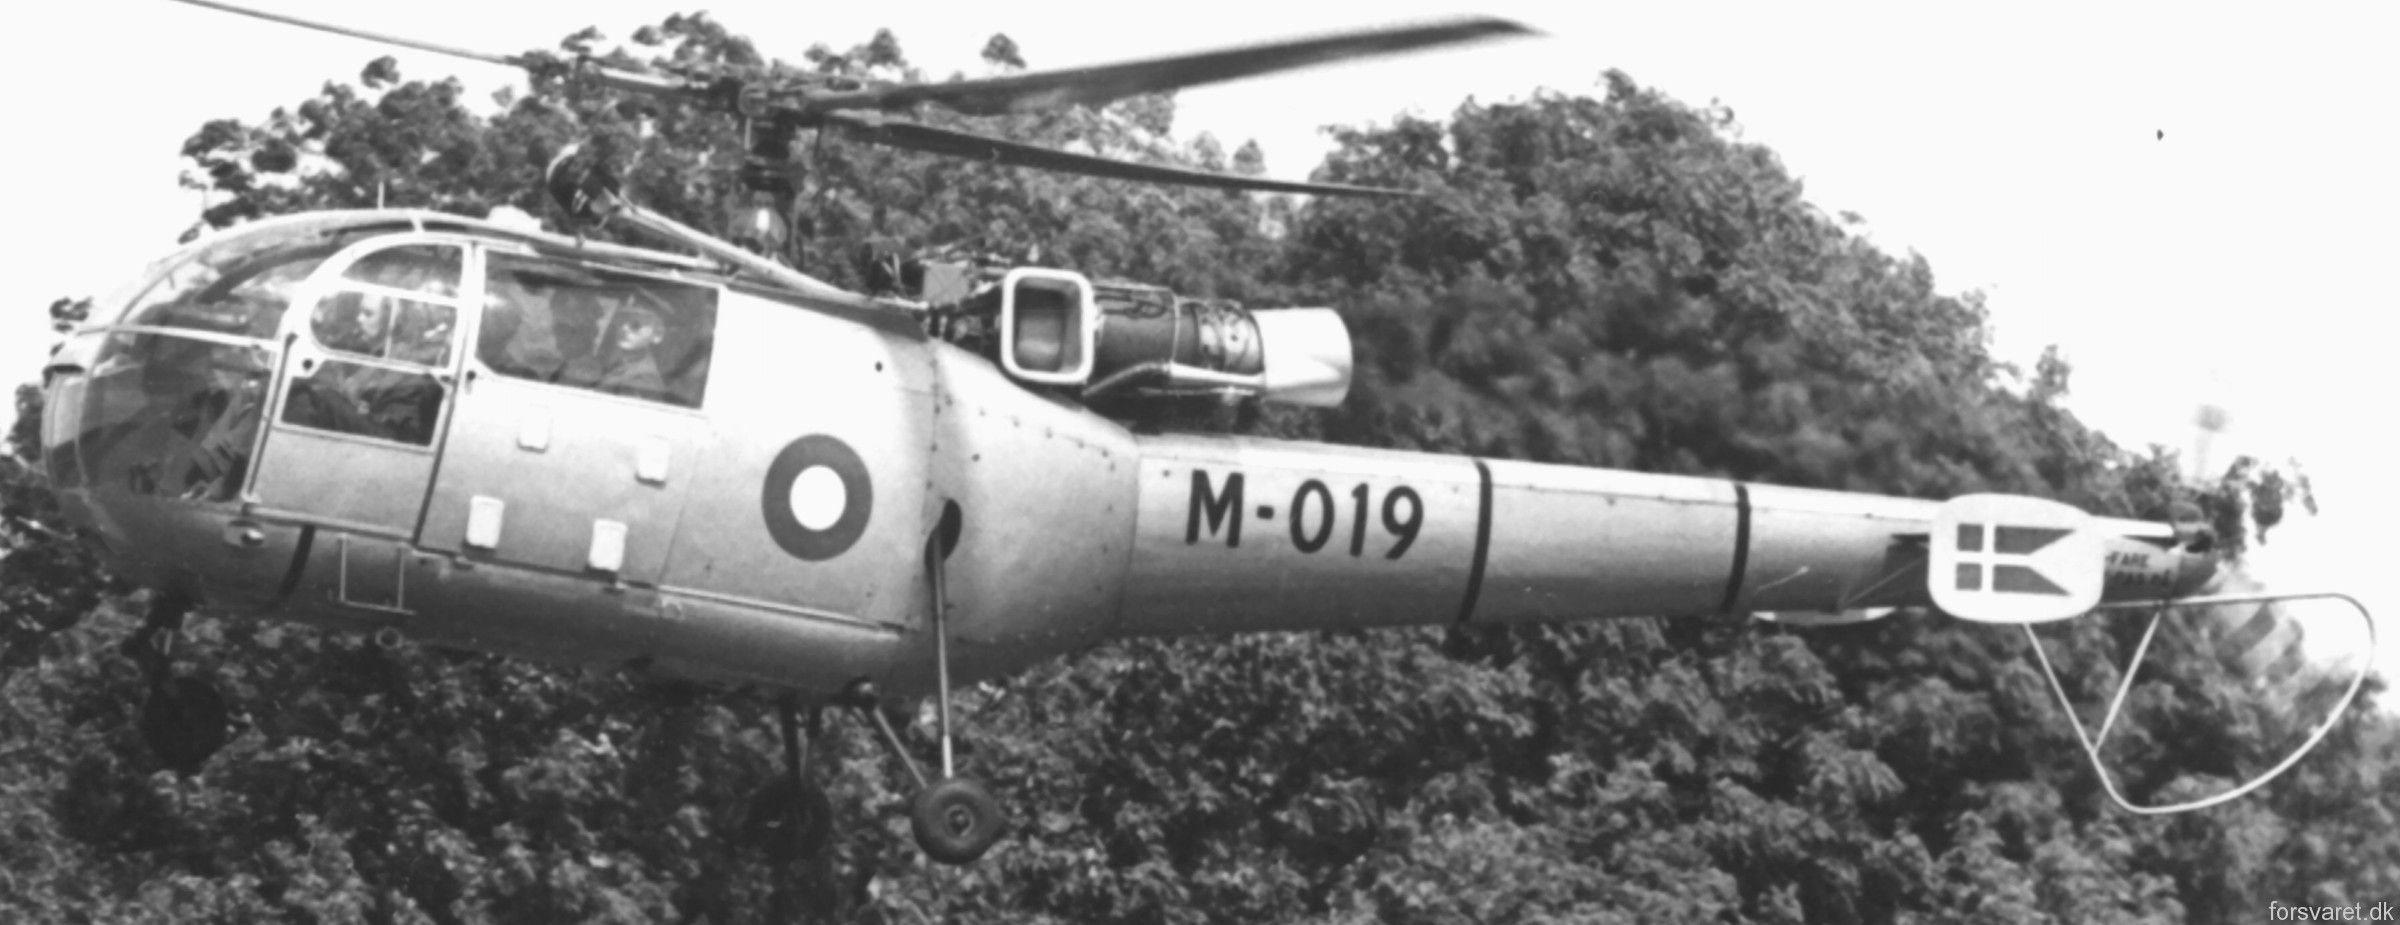 sa 316b alouette iii helicopter royal danish navy søværnet kongelige danske marine sud aviation m-019 12